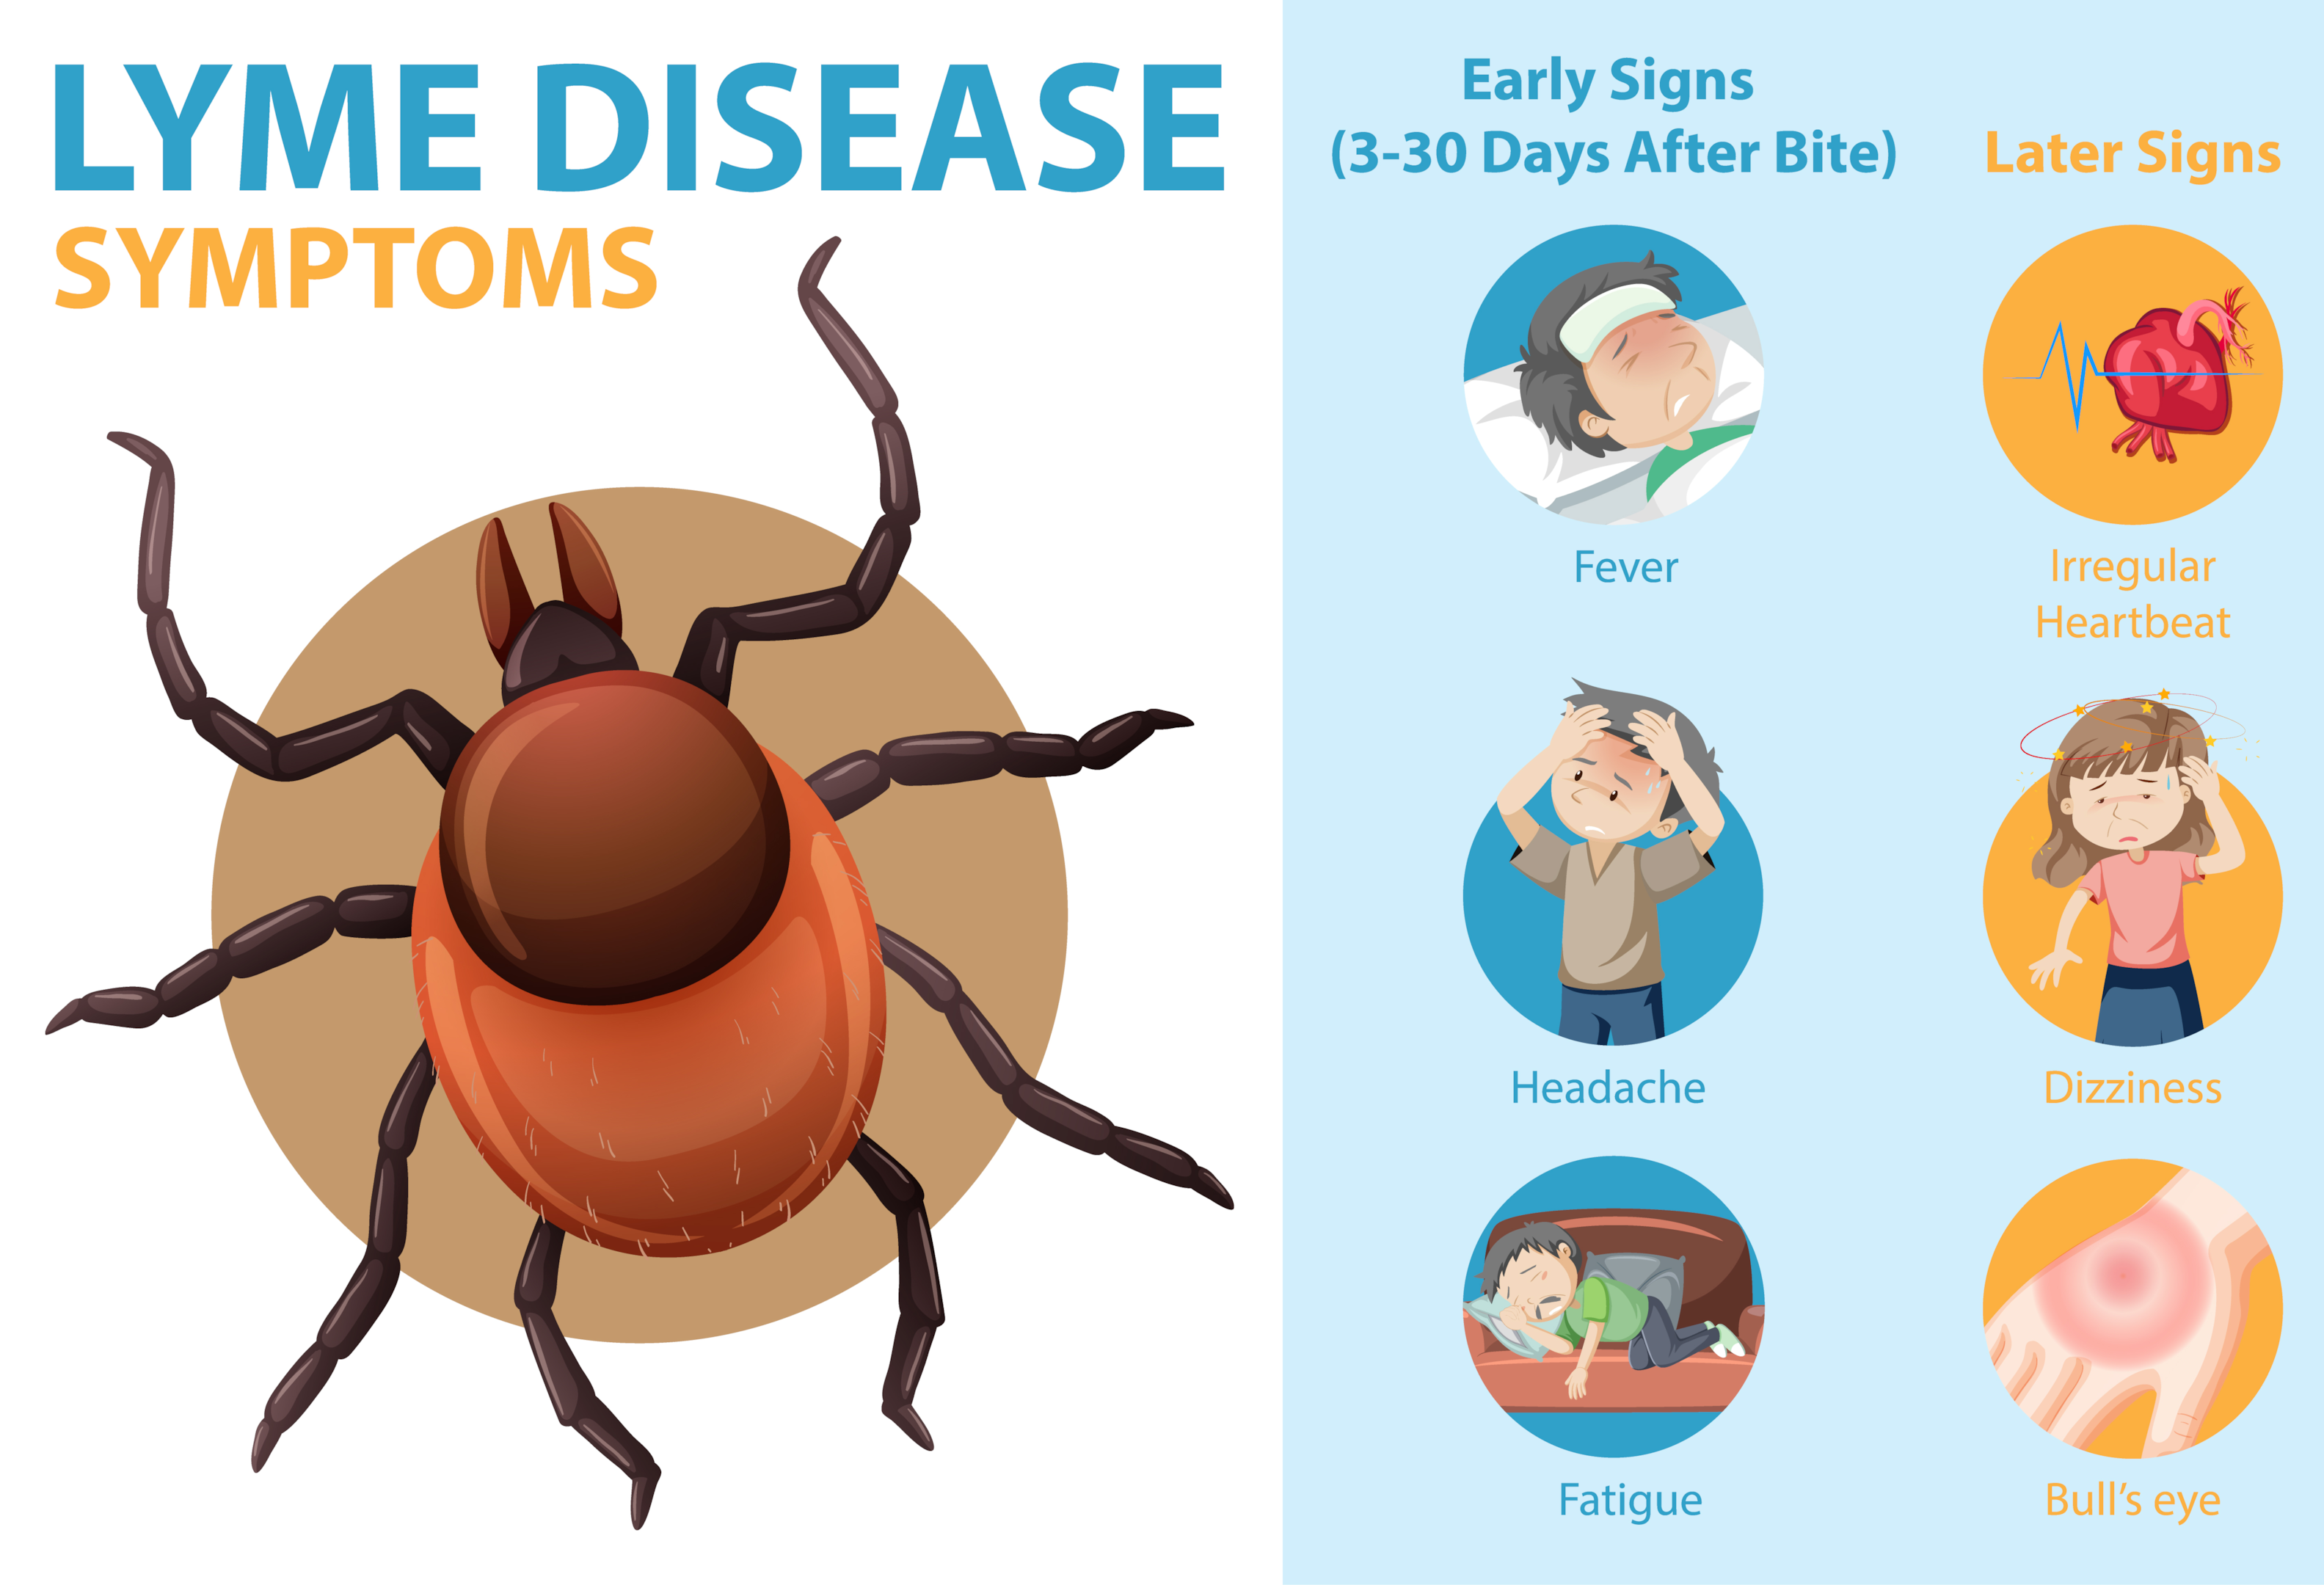 diagnosing lyme disease: lyme disease is caused by a tick bite 